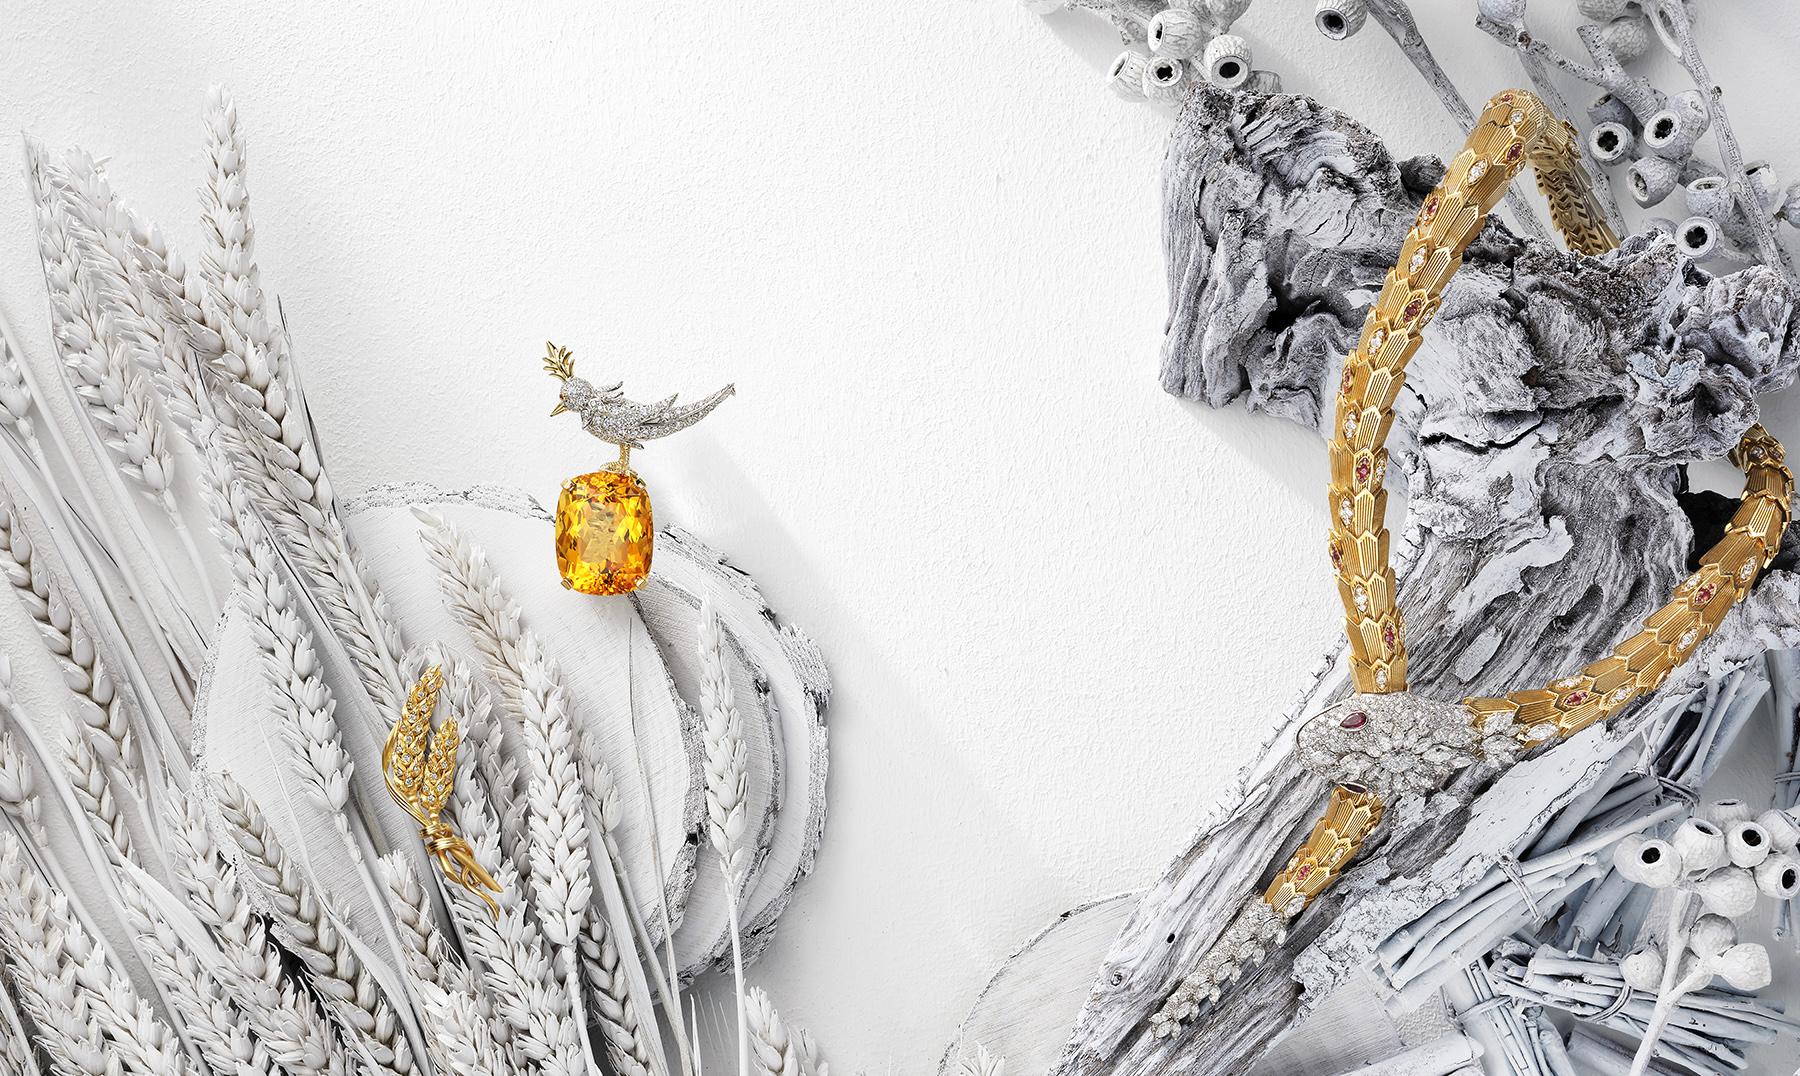 Chaumet L'Épi de Blé de Chaumet 18K 黄金镶钻胸针。 Tiffany & Co. Schlumberger 高级珠宝系列 18K 金与铂金黄水晶石上鸟胸针。 Bvlgari Serpenti 系列顶级白 K 金与黄 K 金红宝石和钻石项链。